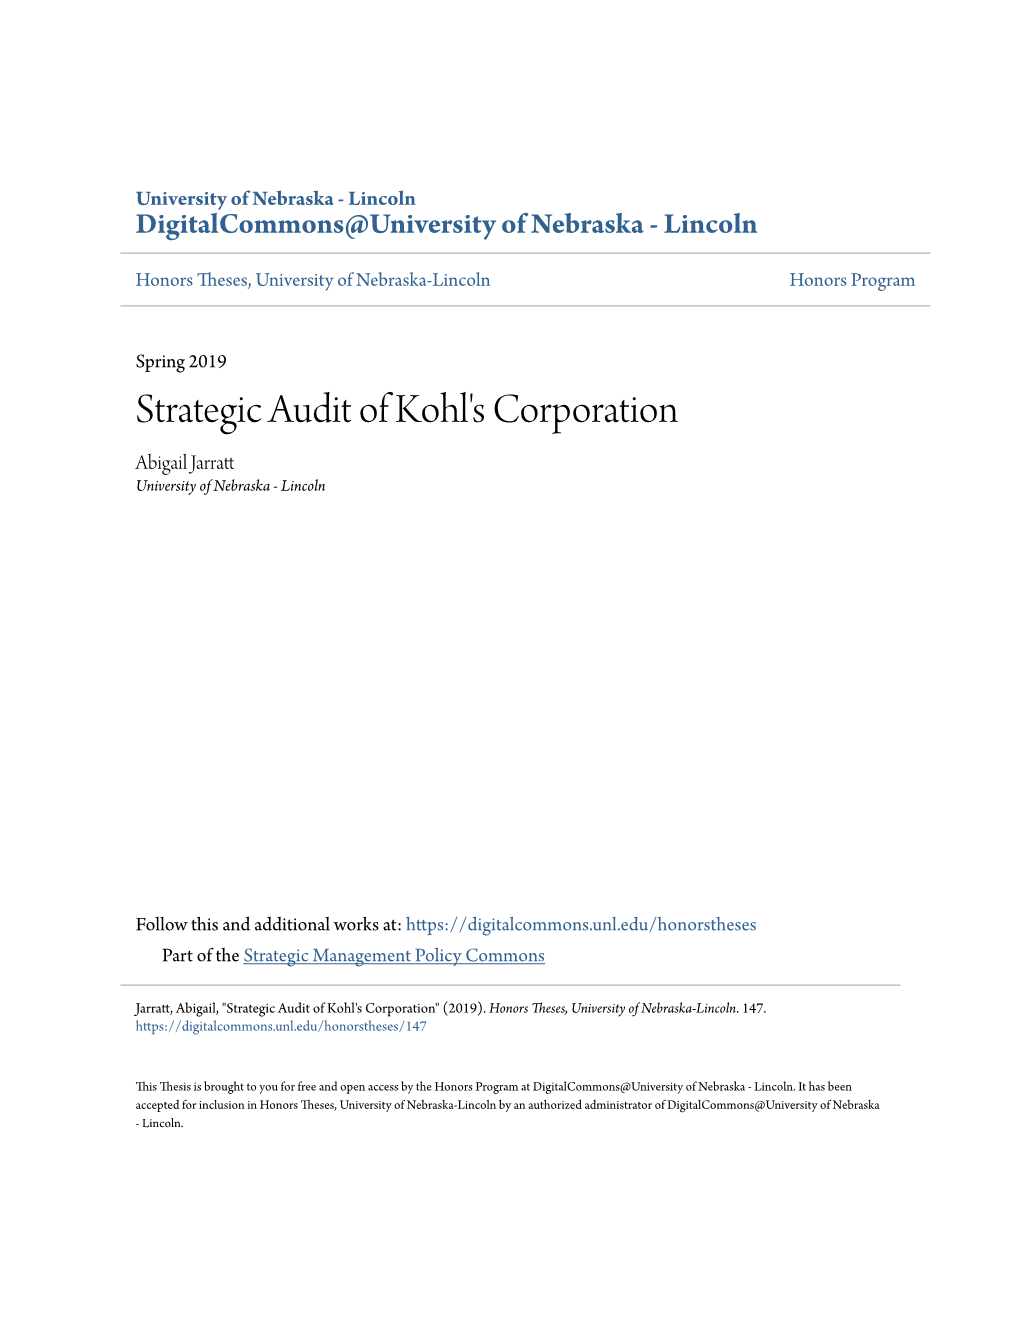 Strategic Audit of Kohl's Corporation Abigail Jarratt University of Nebraska - Lincoln